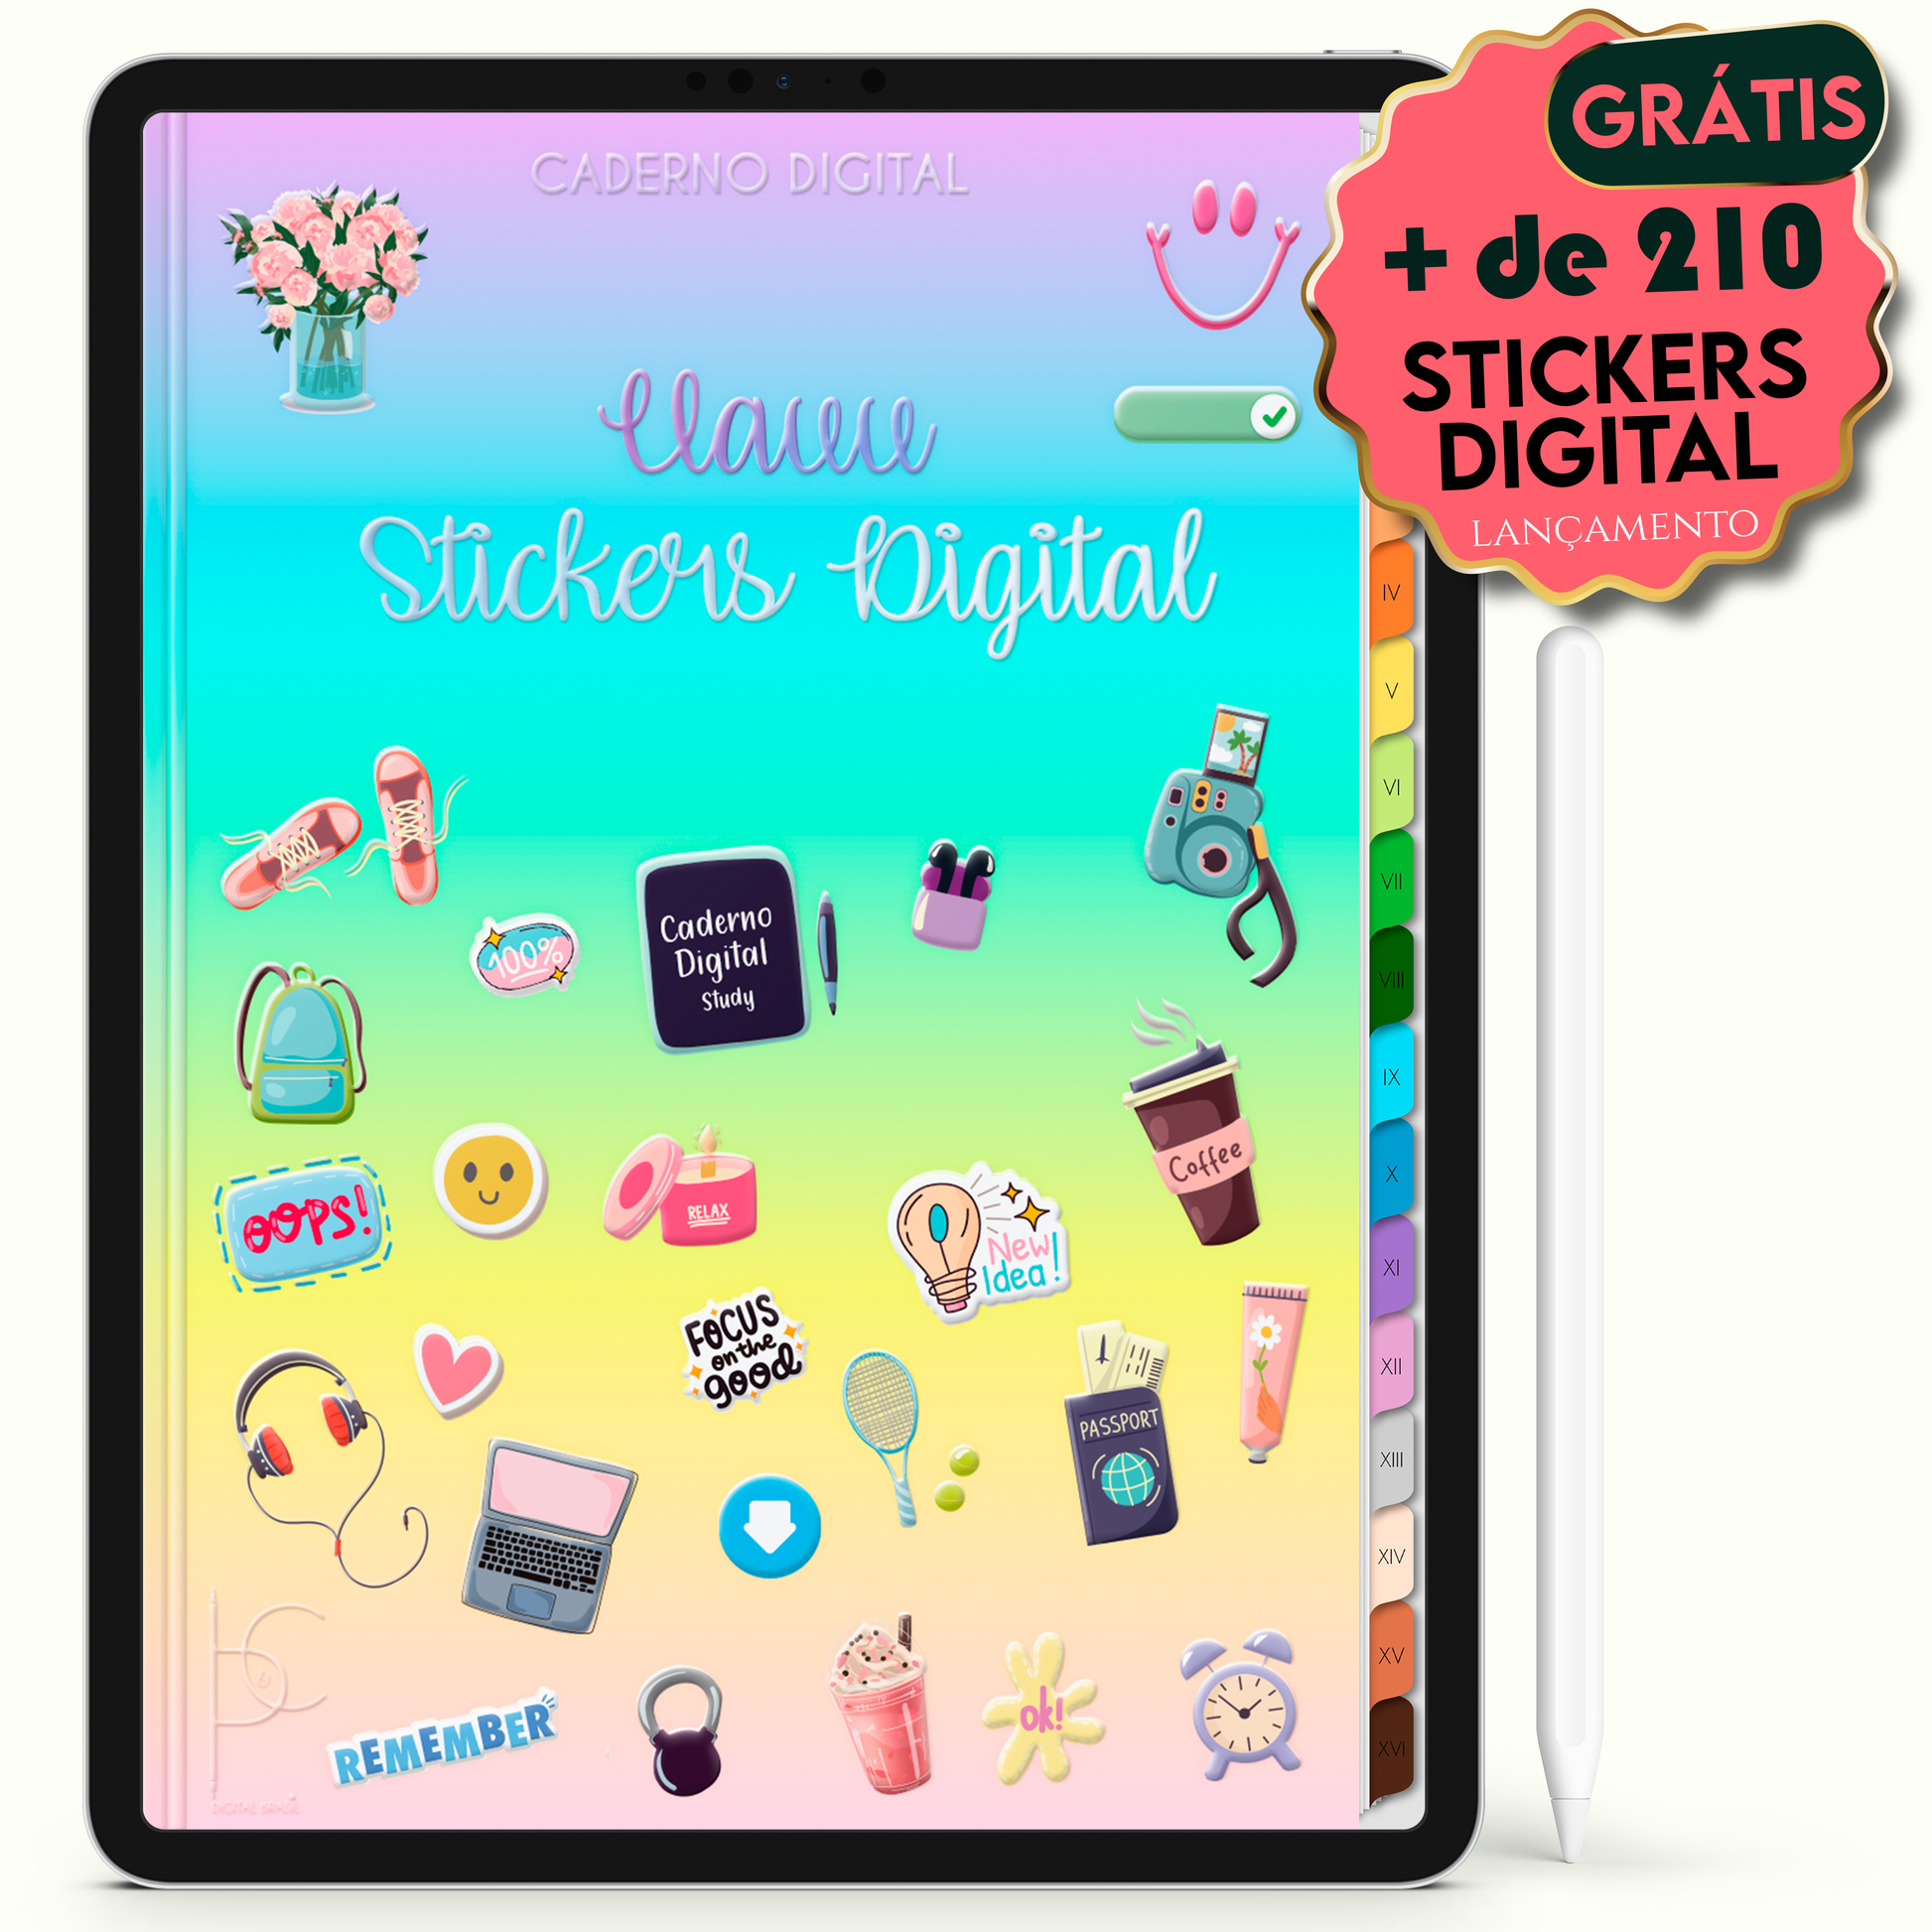 Brinde Ganhe Stickers Adesivo Study Digital Caderno Digital Colors Colorful 16 Matérias • Para iPad e Tablet Android • Download instantâneo • Sustentável